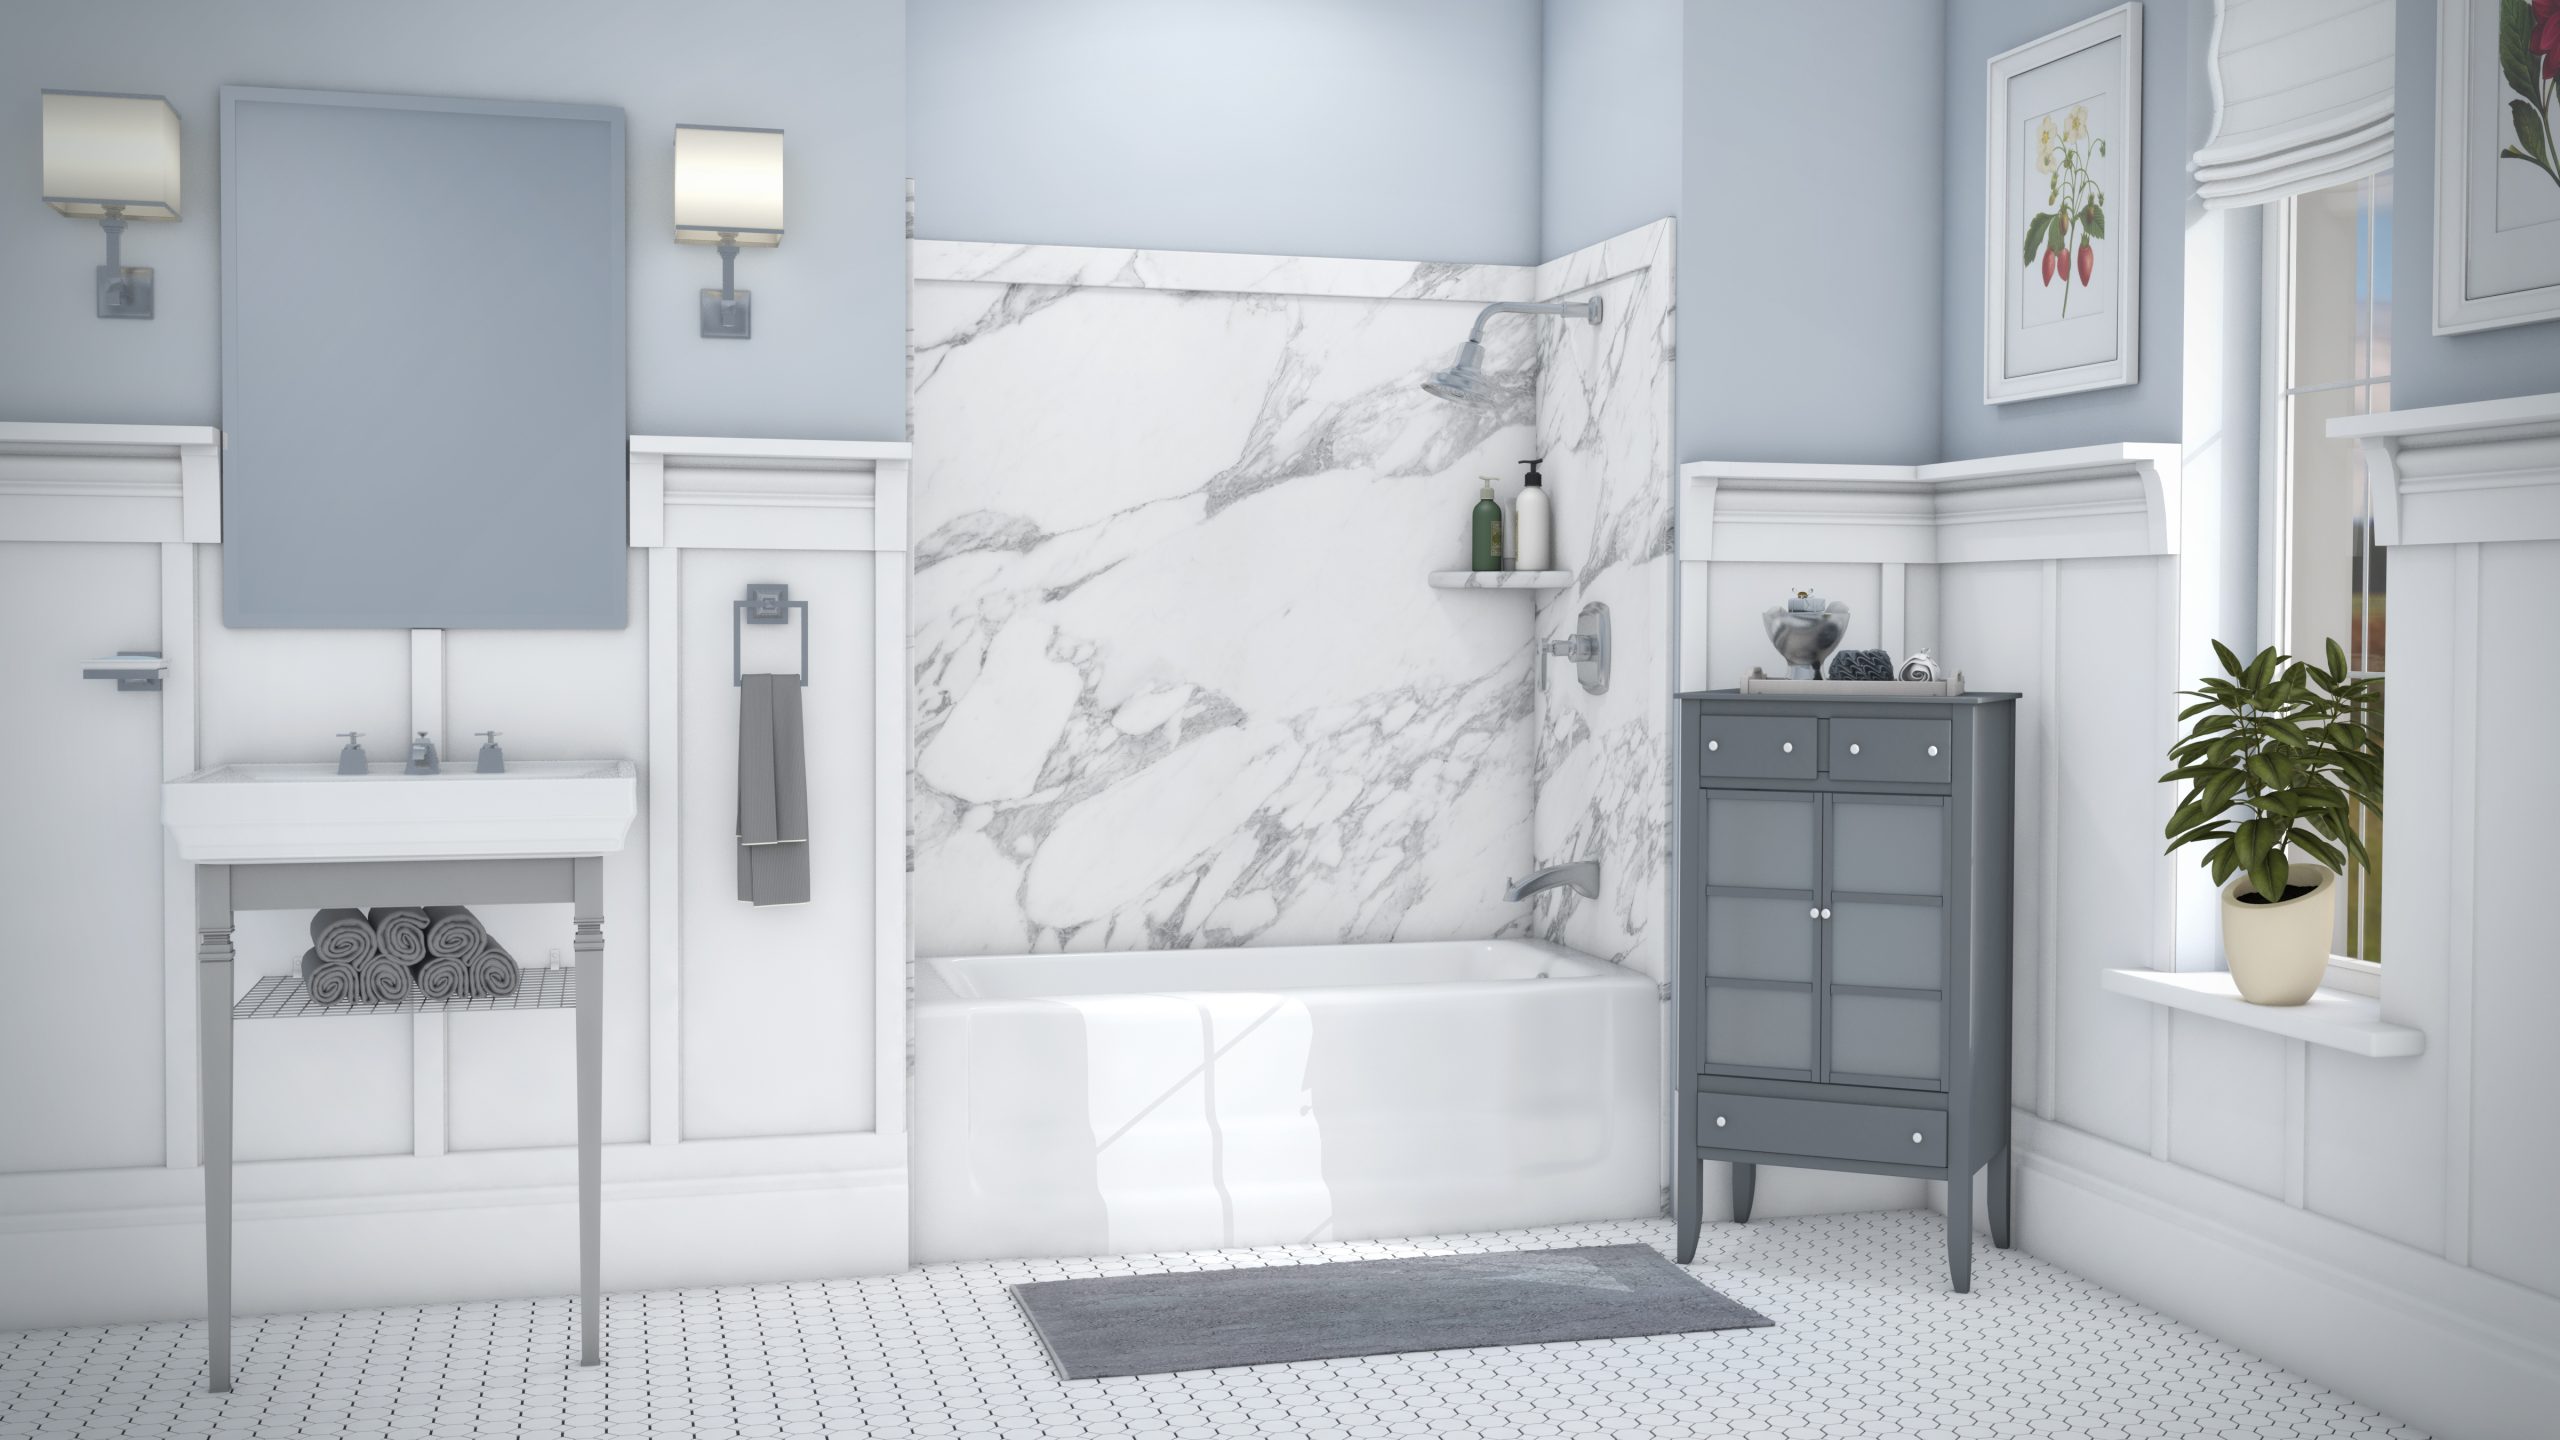 Walk-in tub renovation in calcatta white